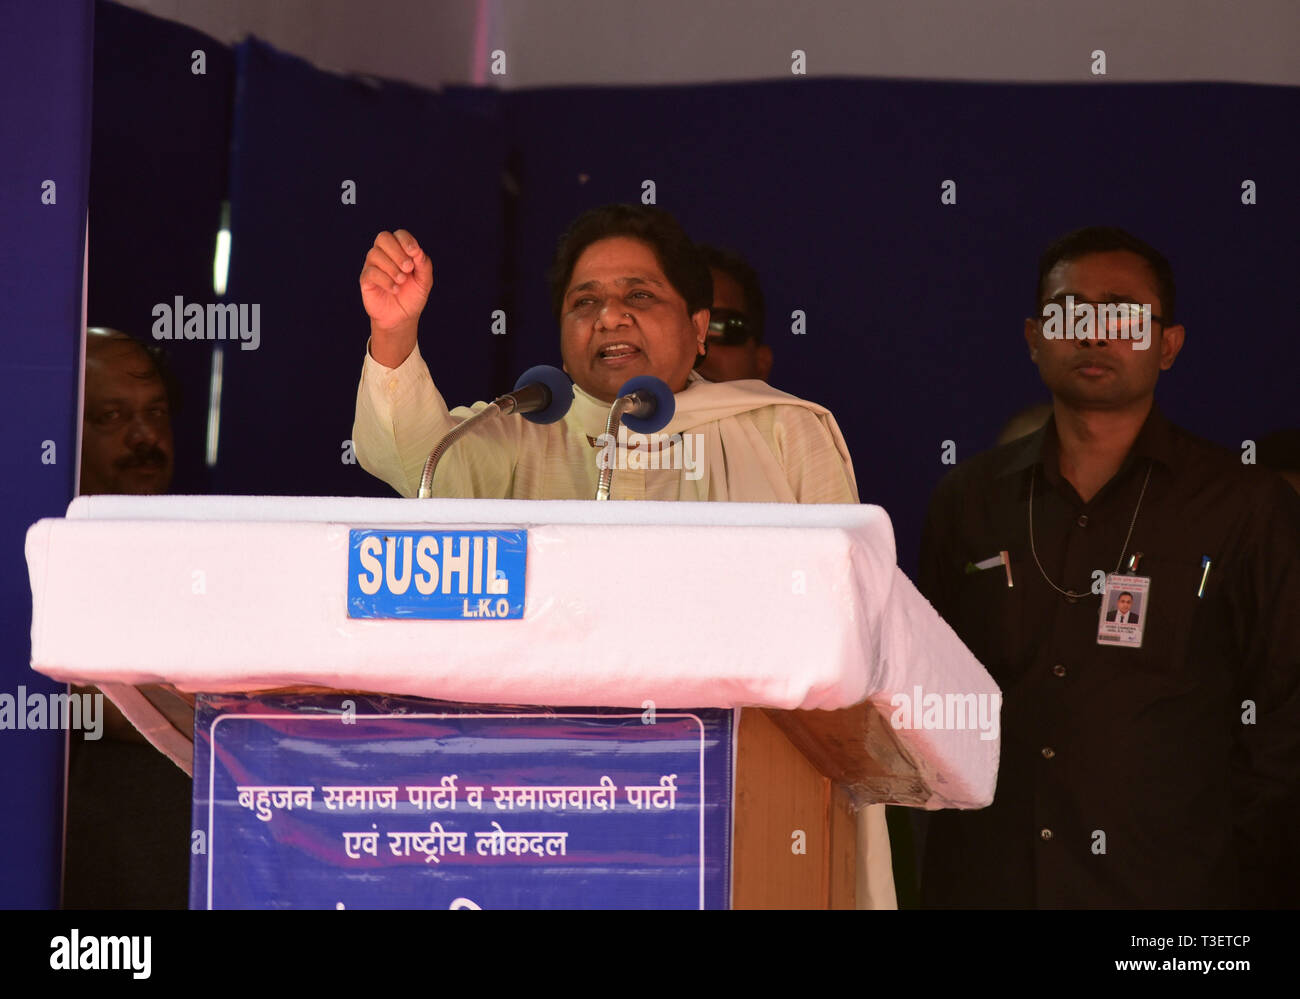 Saharanpur, India. 07th Apr, 2019. BSP supremo Mayawati addressing a joint election campaign rally of Samajwadi Party, Bahujan Samaj party and Rastriya Lok Dal at Deoband Credit: Prabhat Kumar Verma/Pacific Press/Alamy Live News Stock Photo